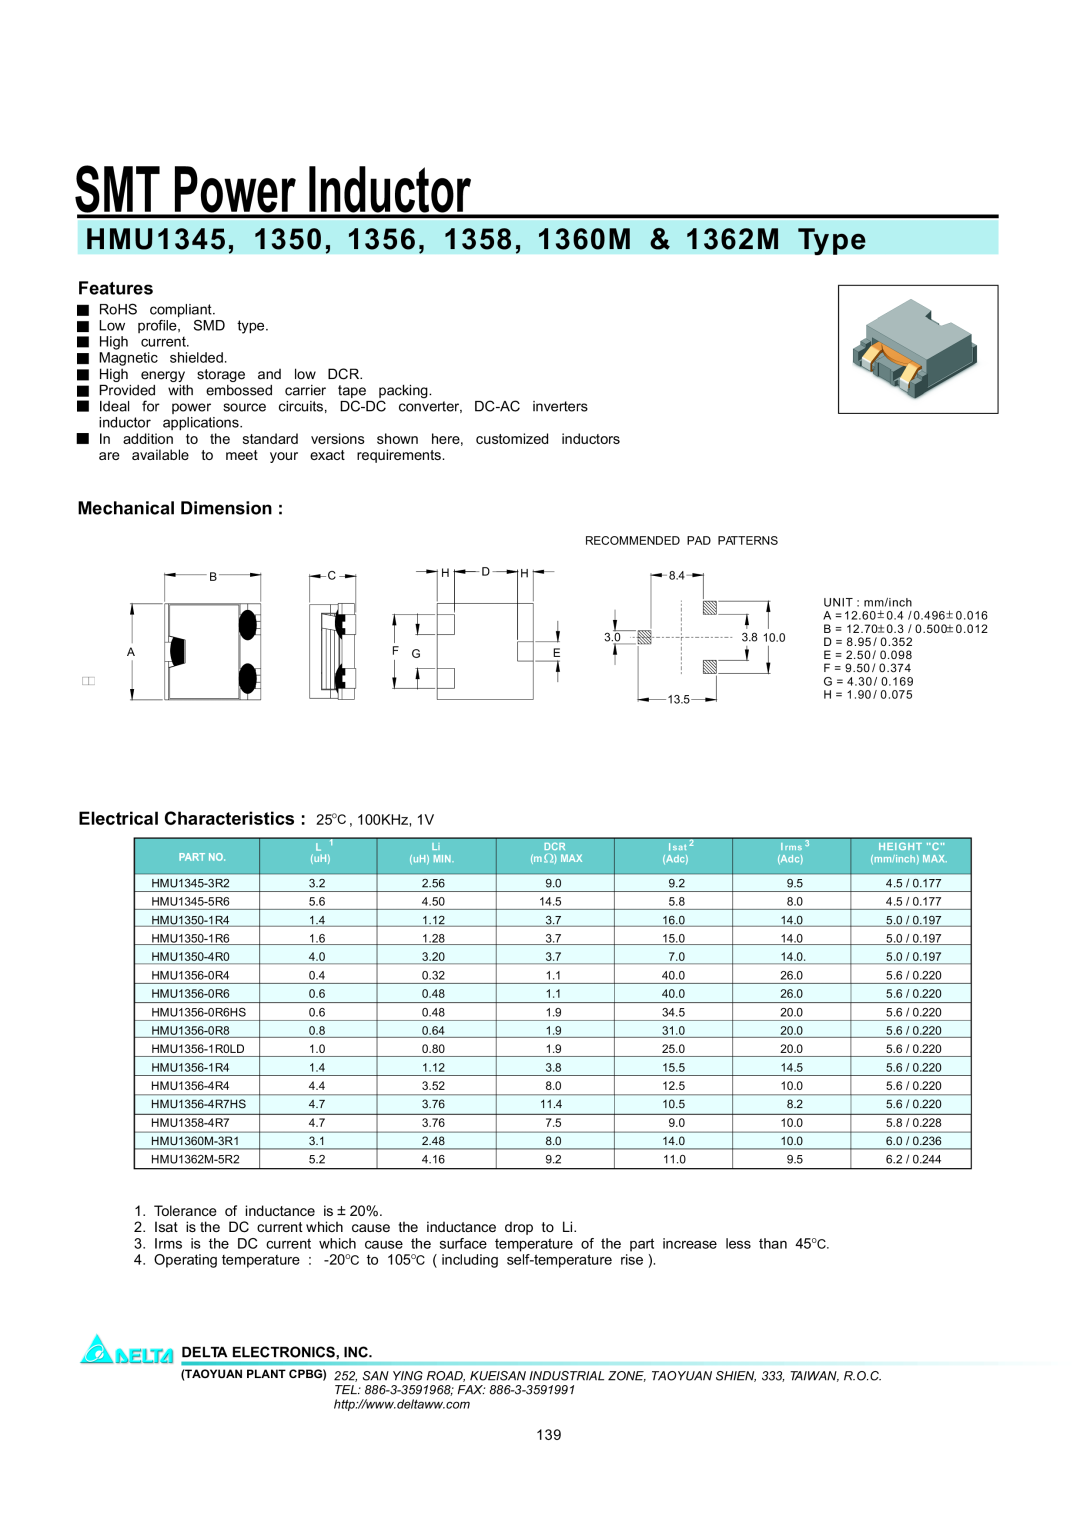 Delta Electronics HMU1360M, HMU1362M manual SMT Power Inductor, HMU1345, 1350, 1356, 1358, 1360M & 1362M Type, Features 